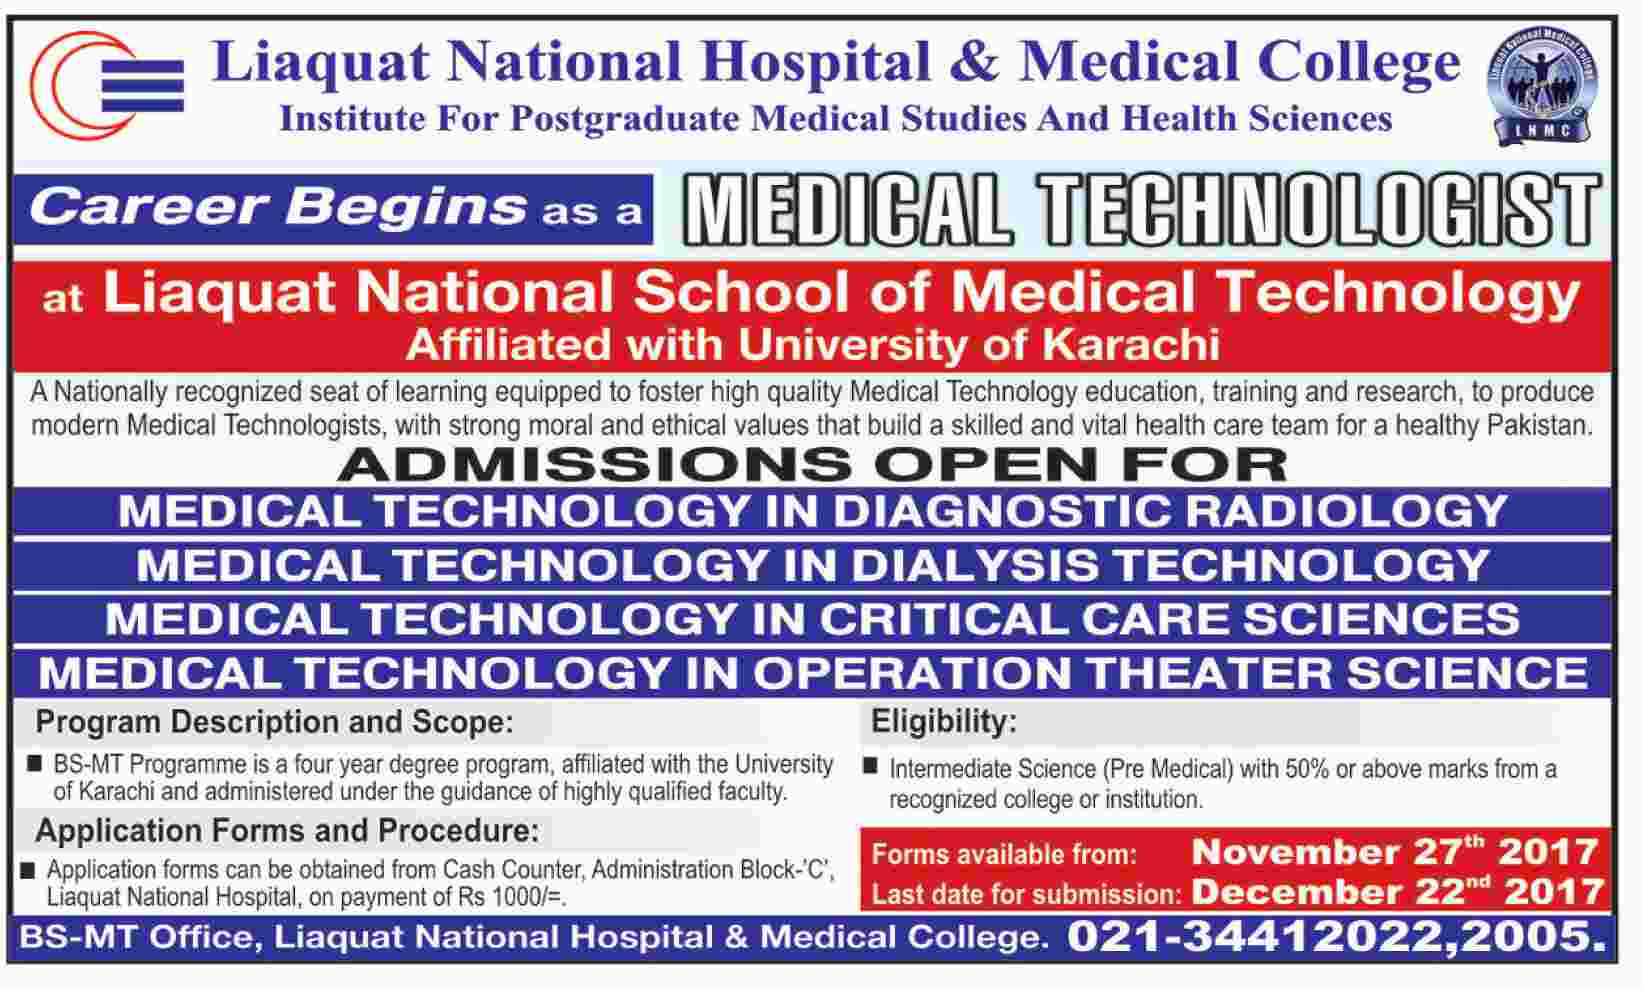 Liaquat National Hospital & Medical College, Karachi Admissions 2017.